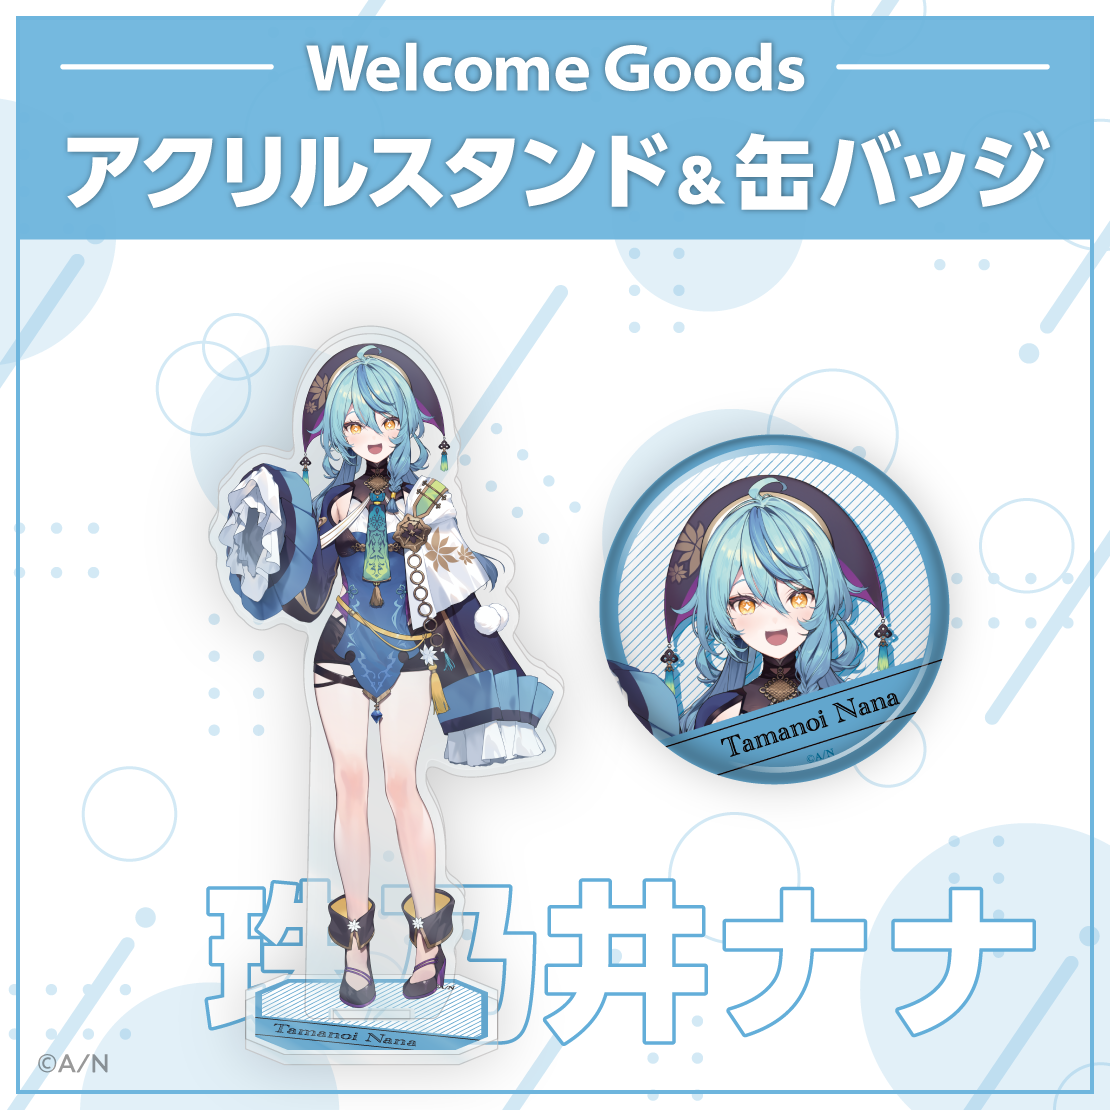 【Welcome Goods】珠乃井ナナ